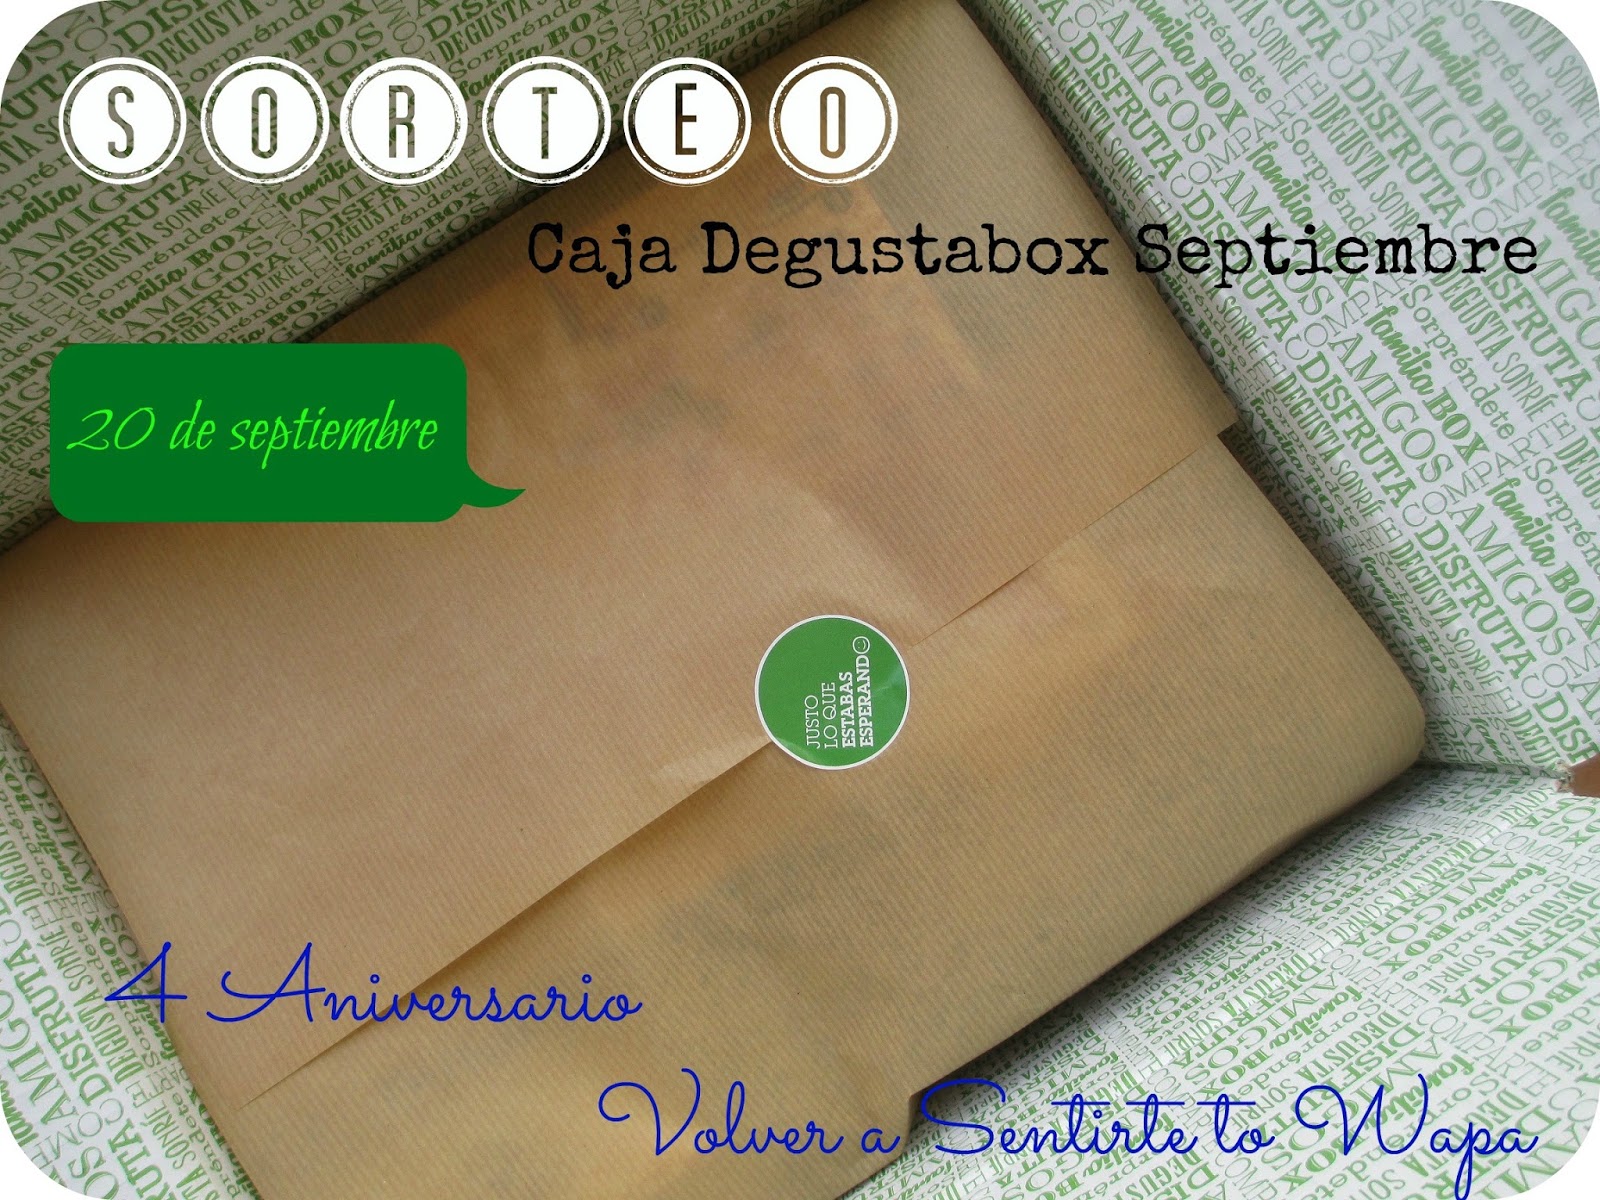 Sorteo Degustabox - Volver a Sentirte to Wapa